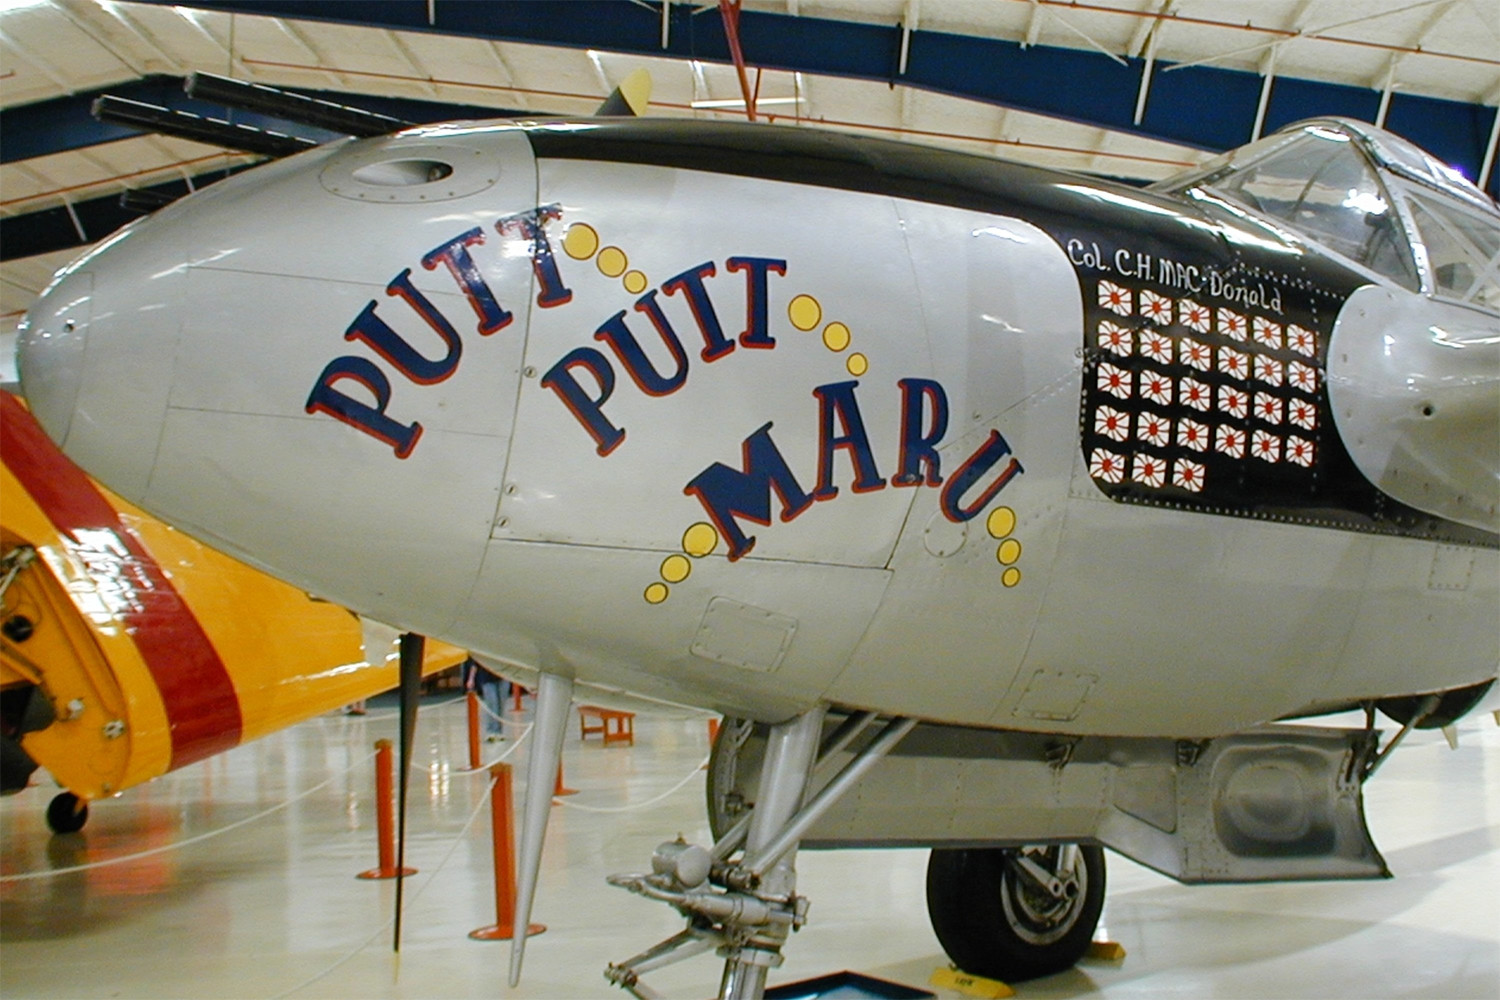 P-38 "Put Put Maru" Vinyl Graphics